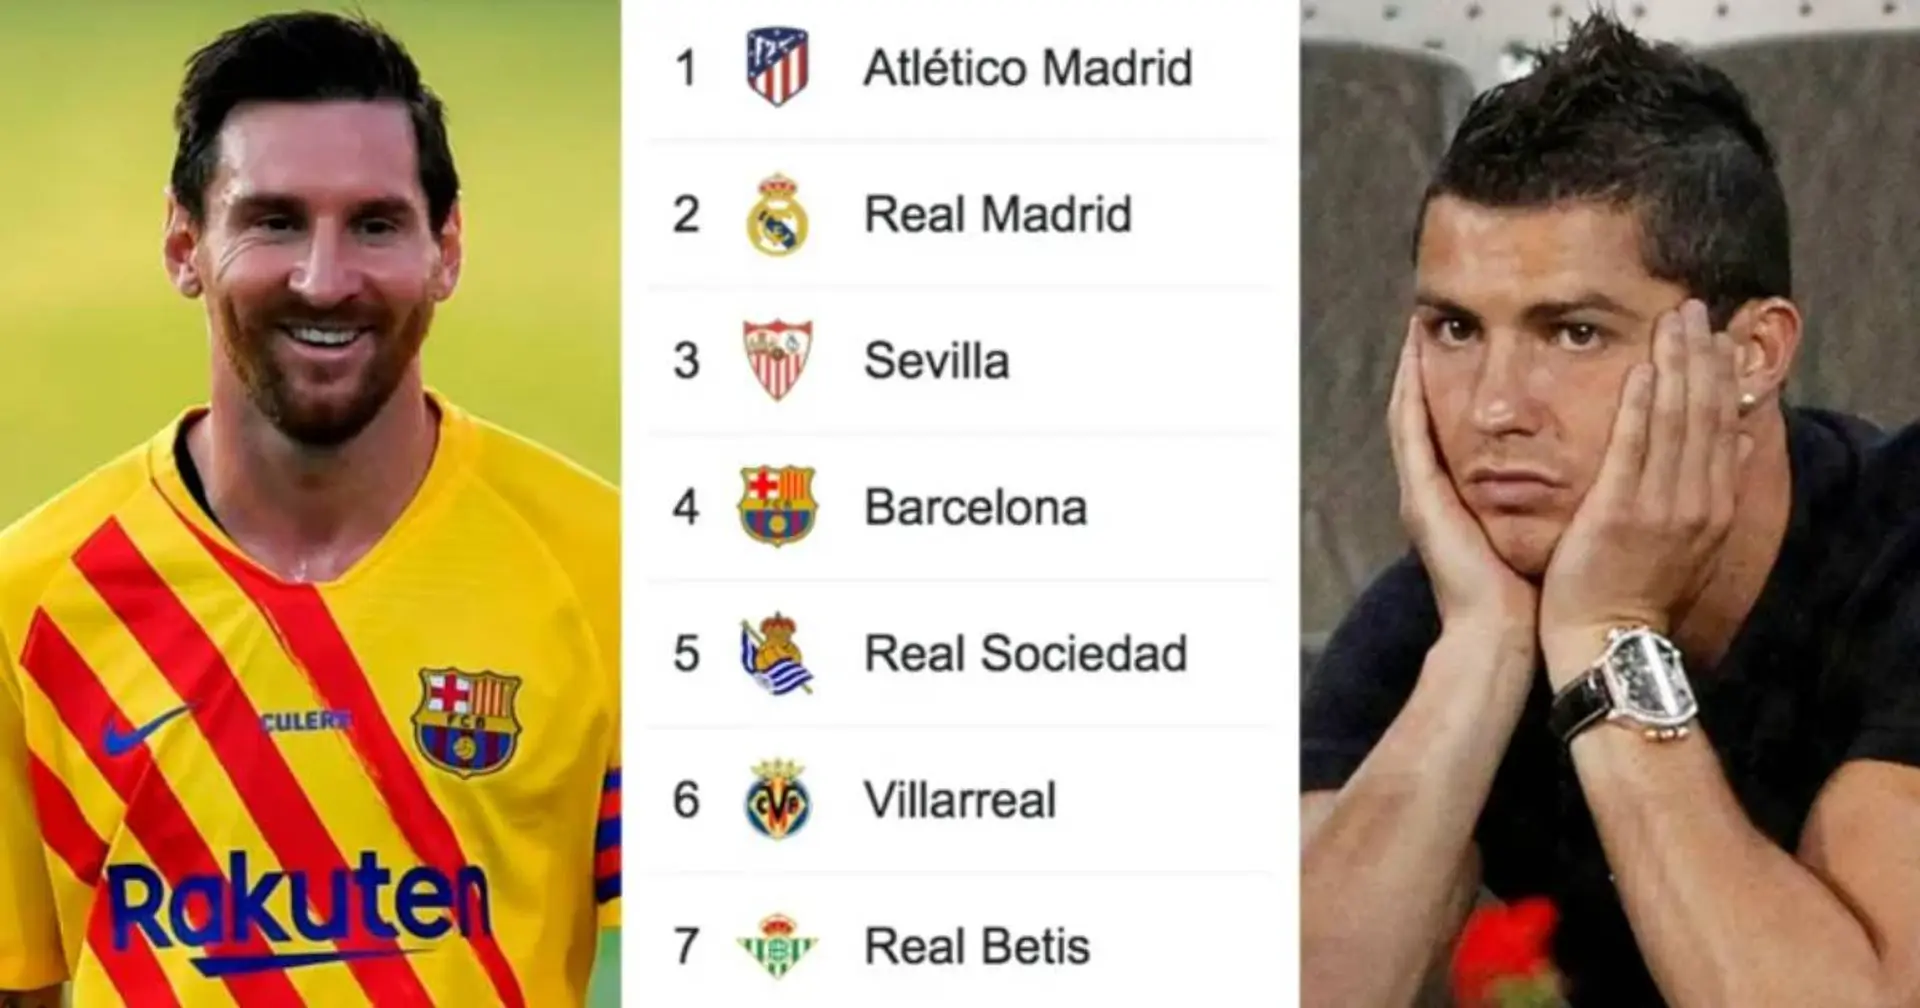 Messi marca más goles vs Top 10 de LaLiga que Cristiano vs Top de Serie A esta campaña